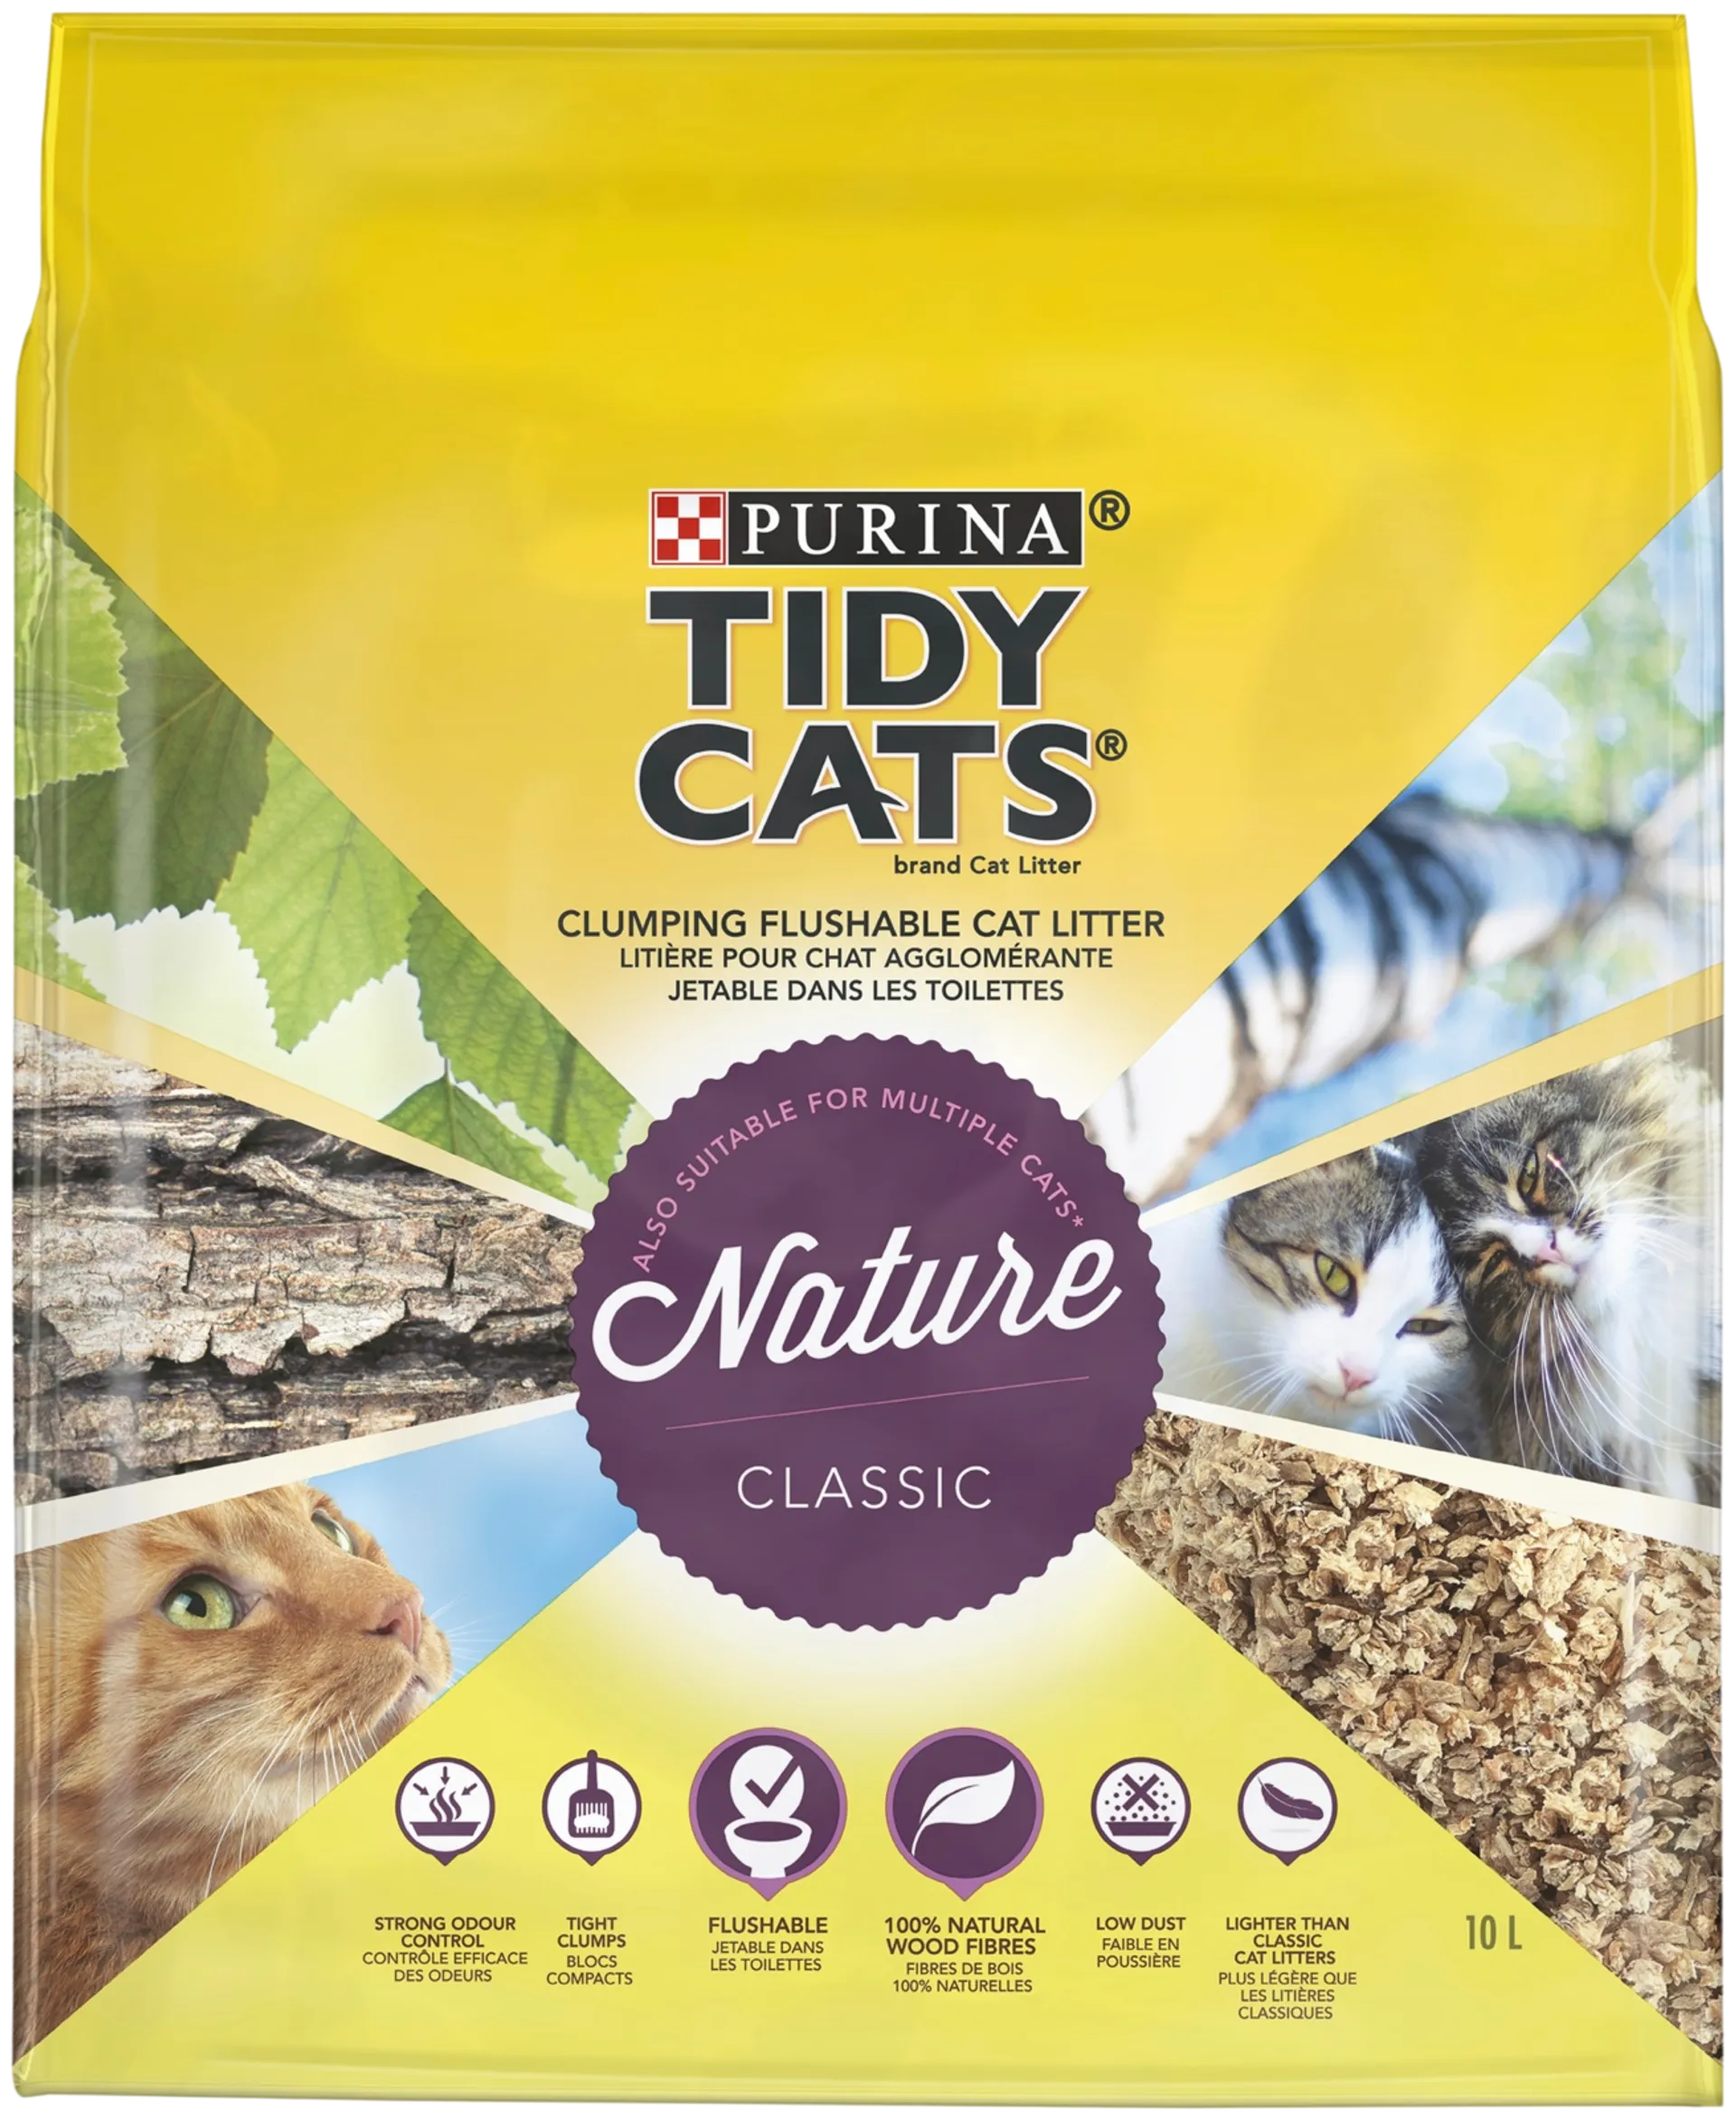 Purina® Tidy Cats® 10l Nature Classic paakkuuntuva kissanhiekka